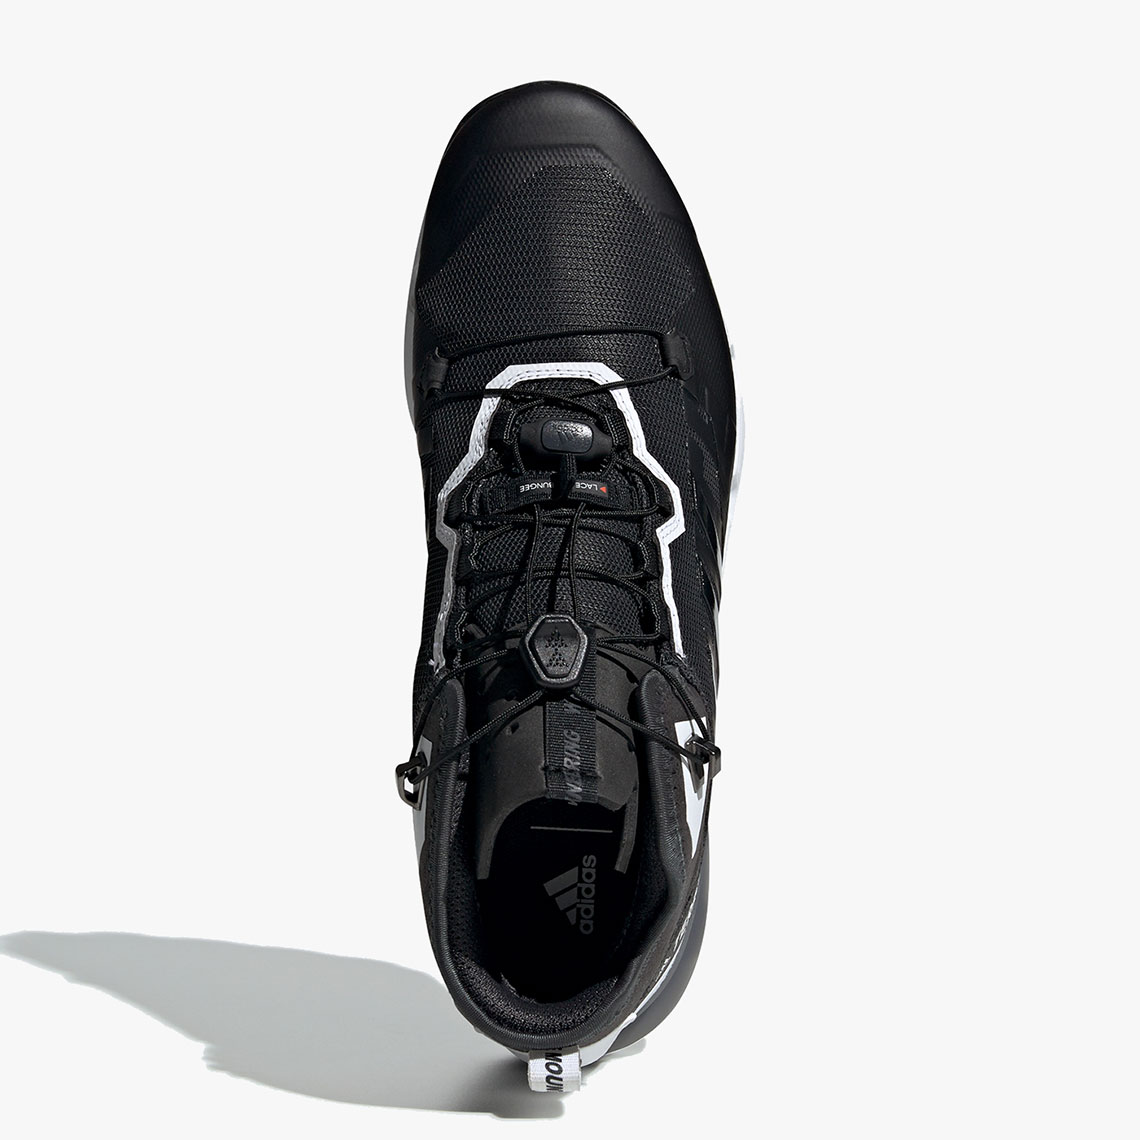 White Mountaineering adidas Terrex Release Info | SneakerNews.com